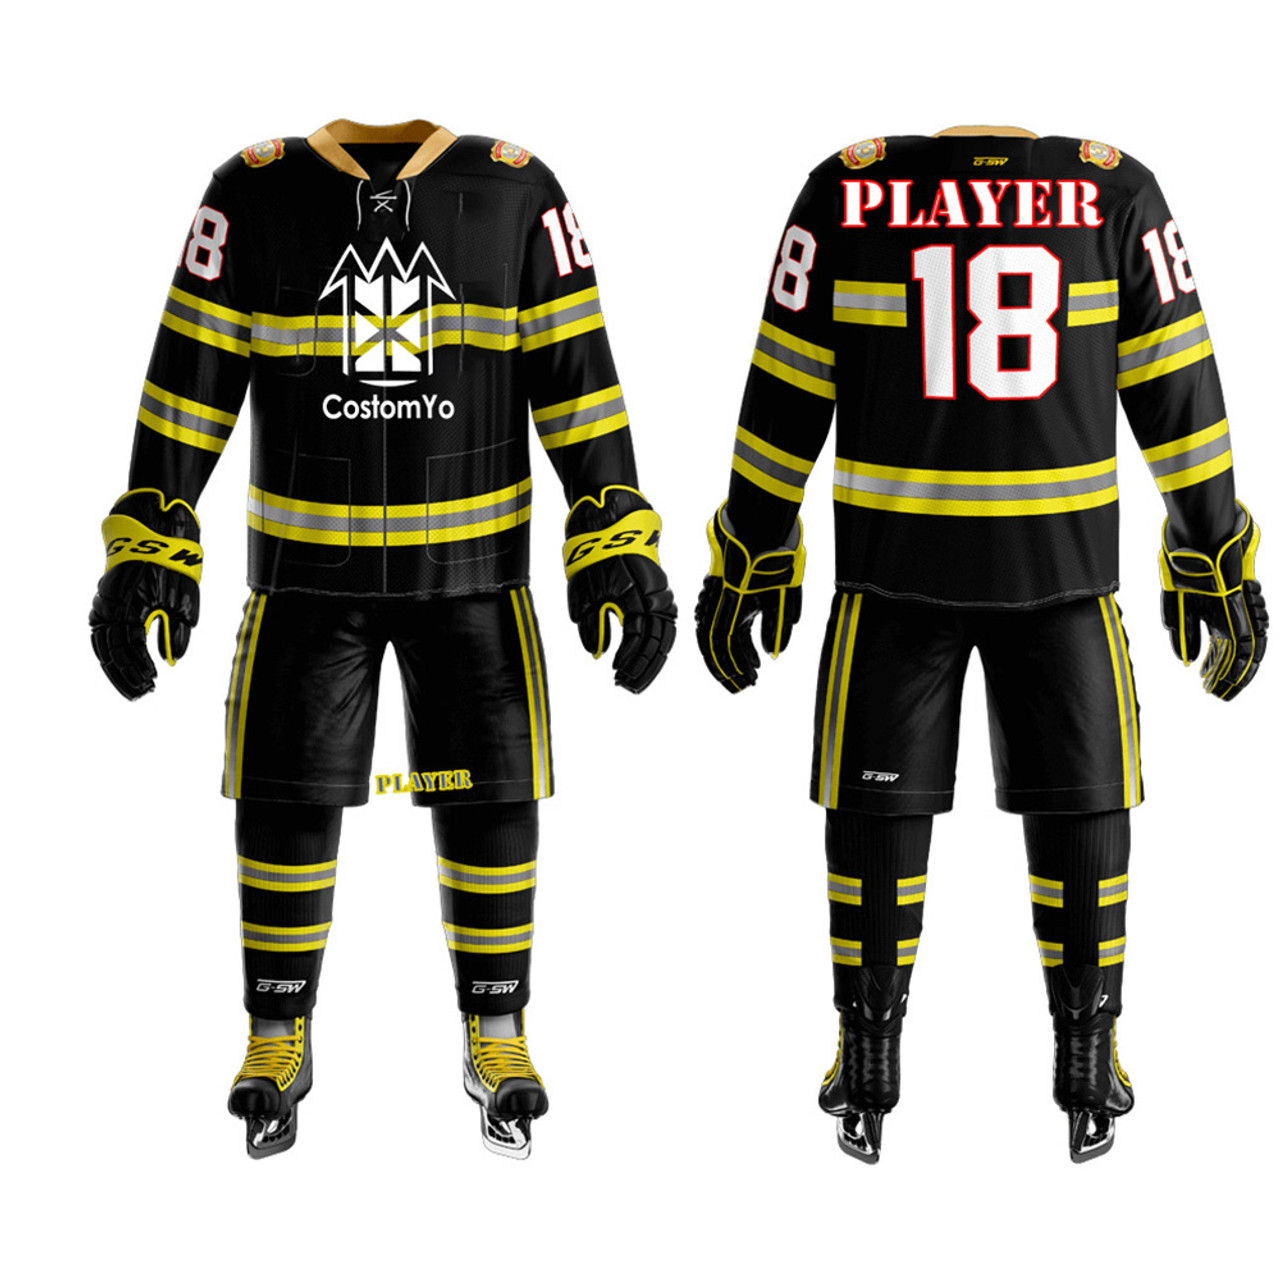 Boston Bruins Jerseys & Teamwear, NHL Merch